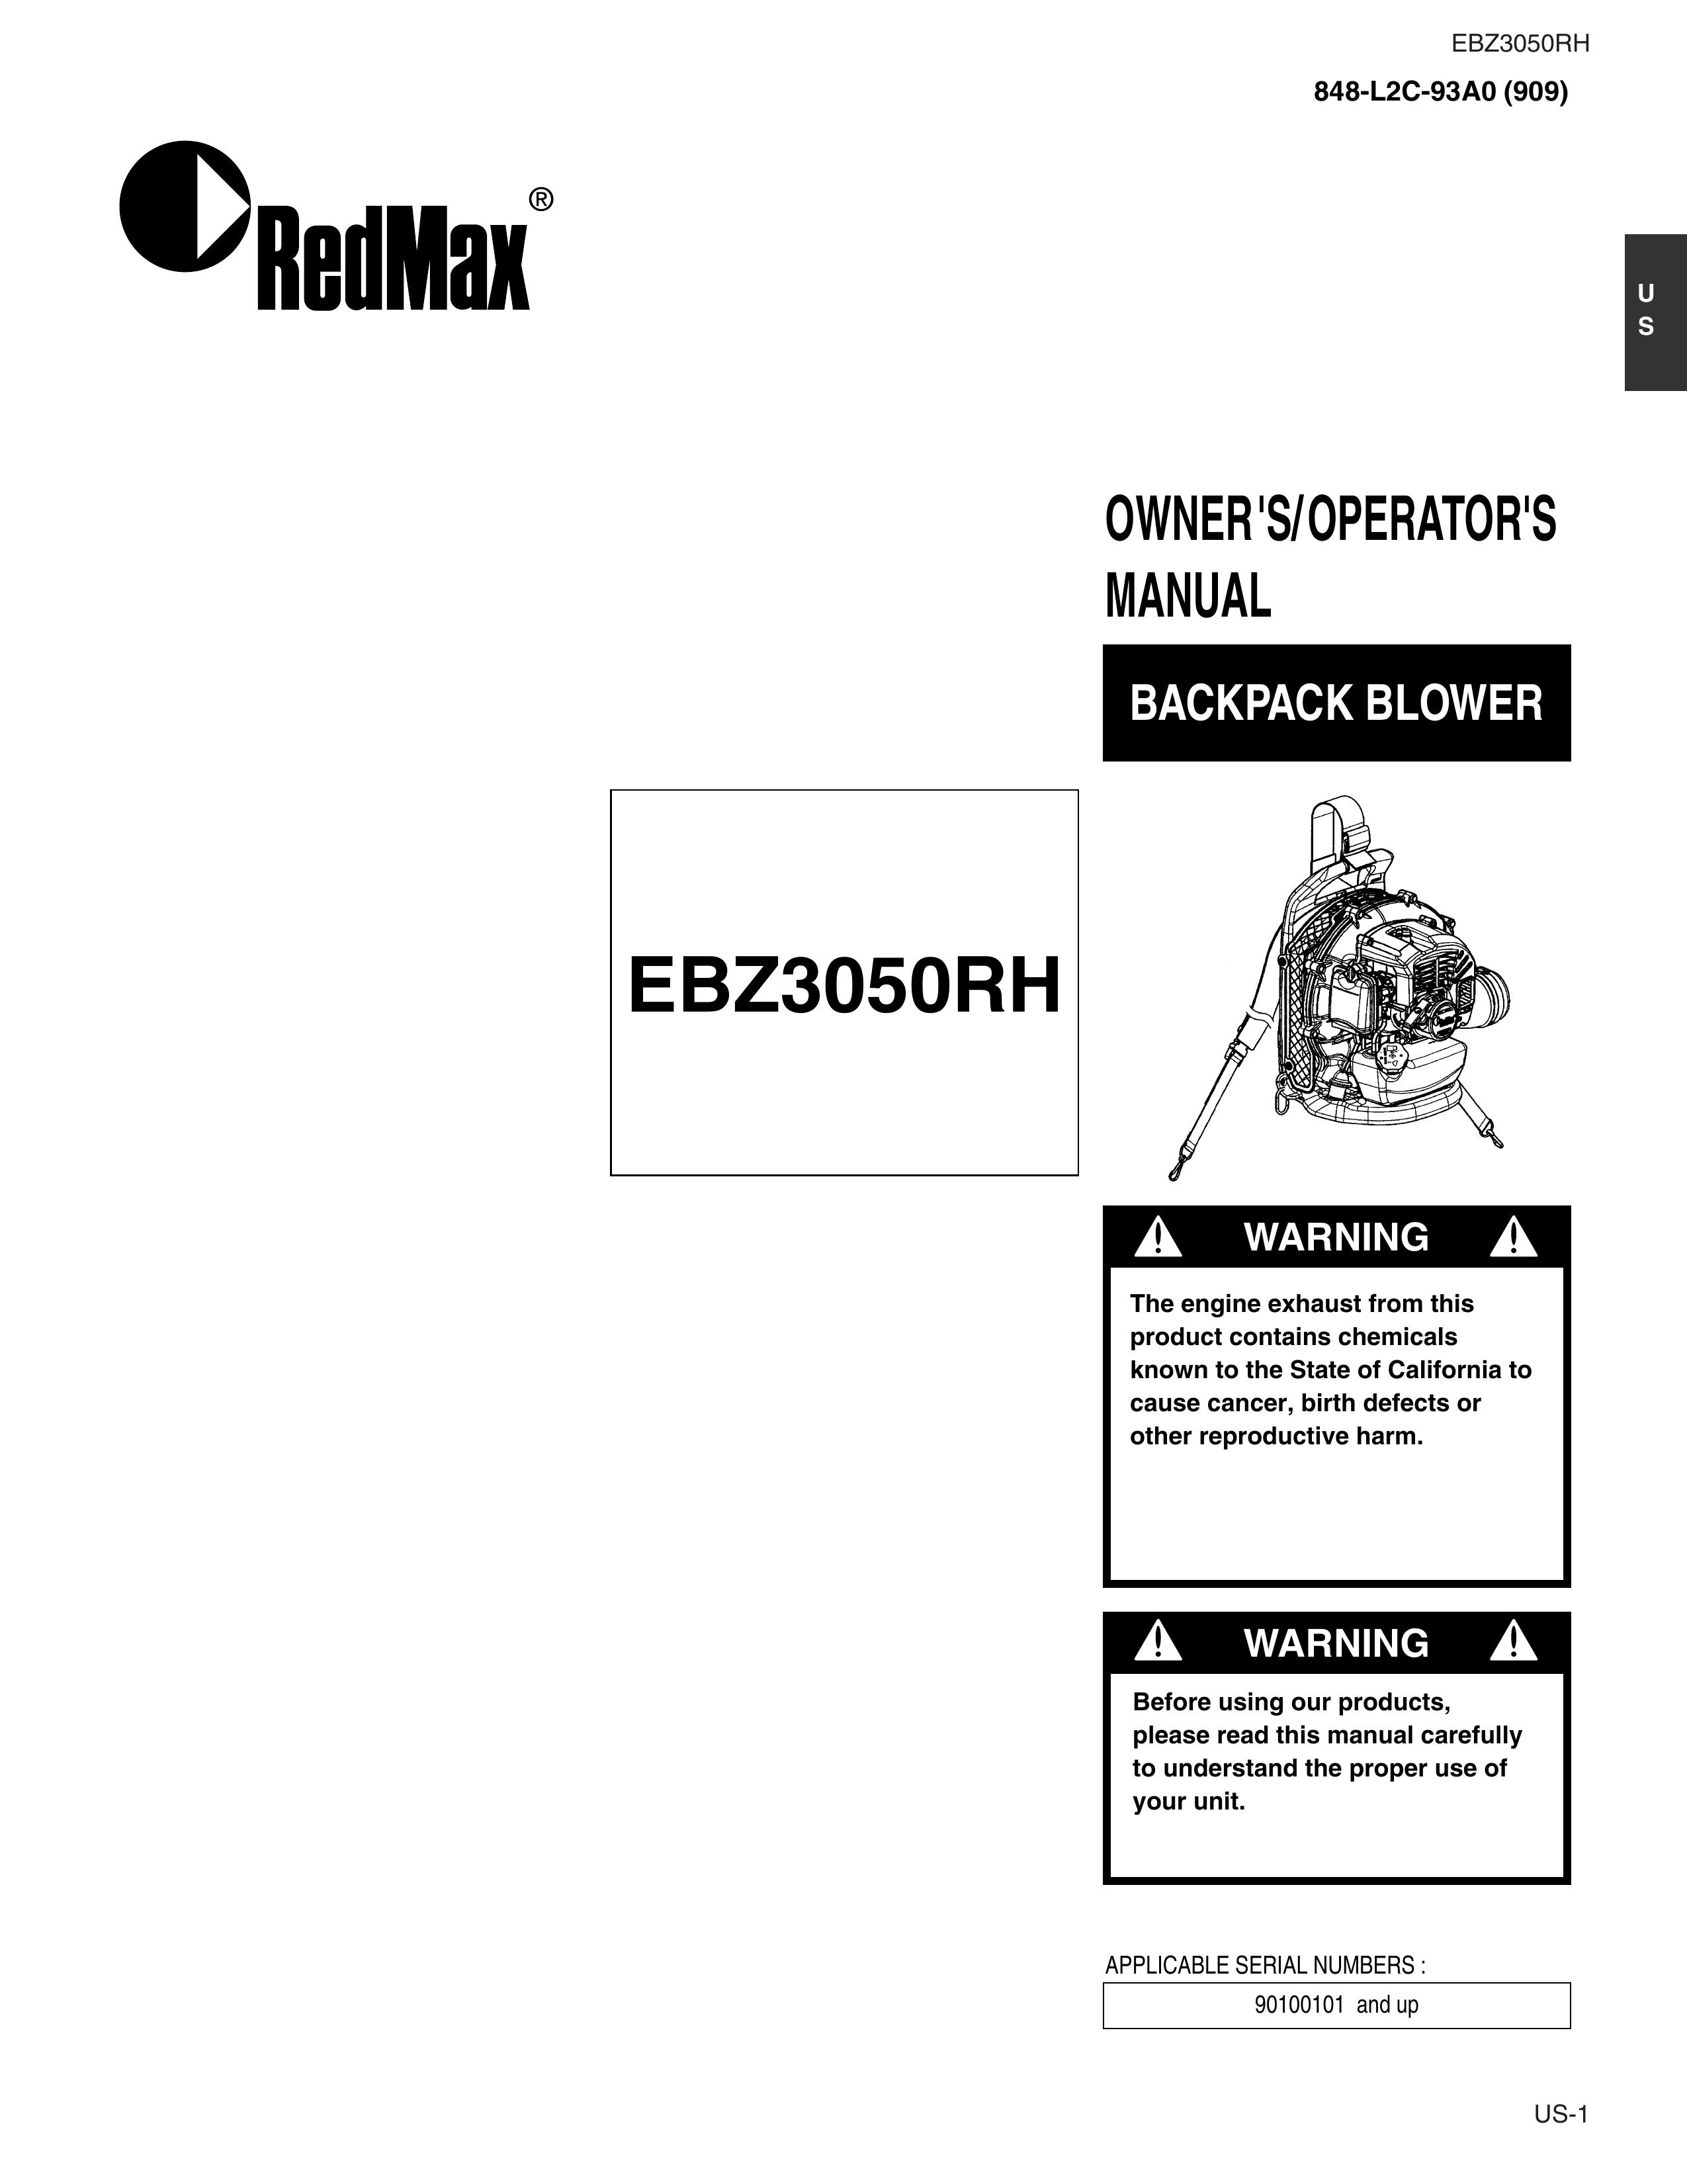 RedMax EBZ3050RH Blower User Manual